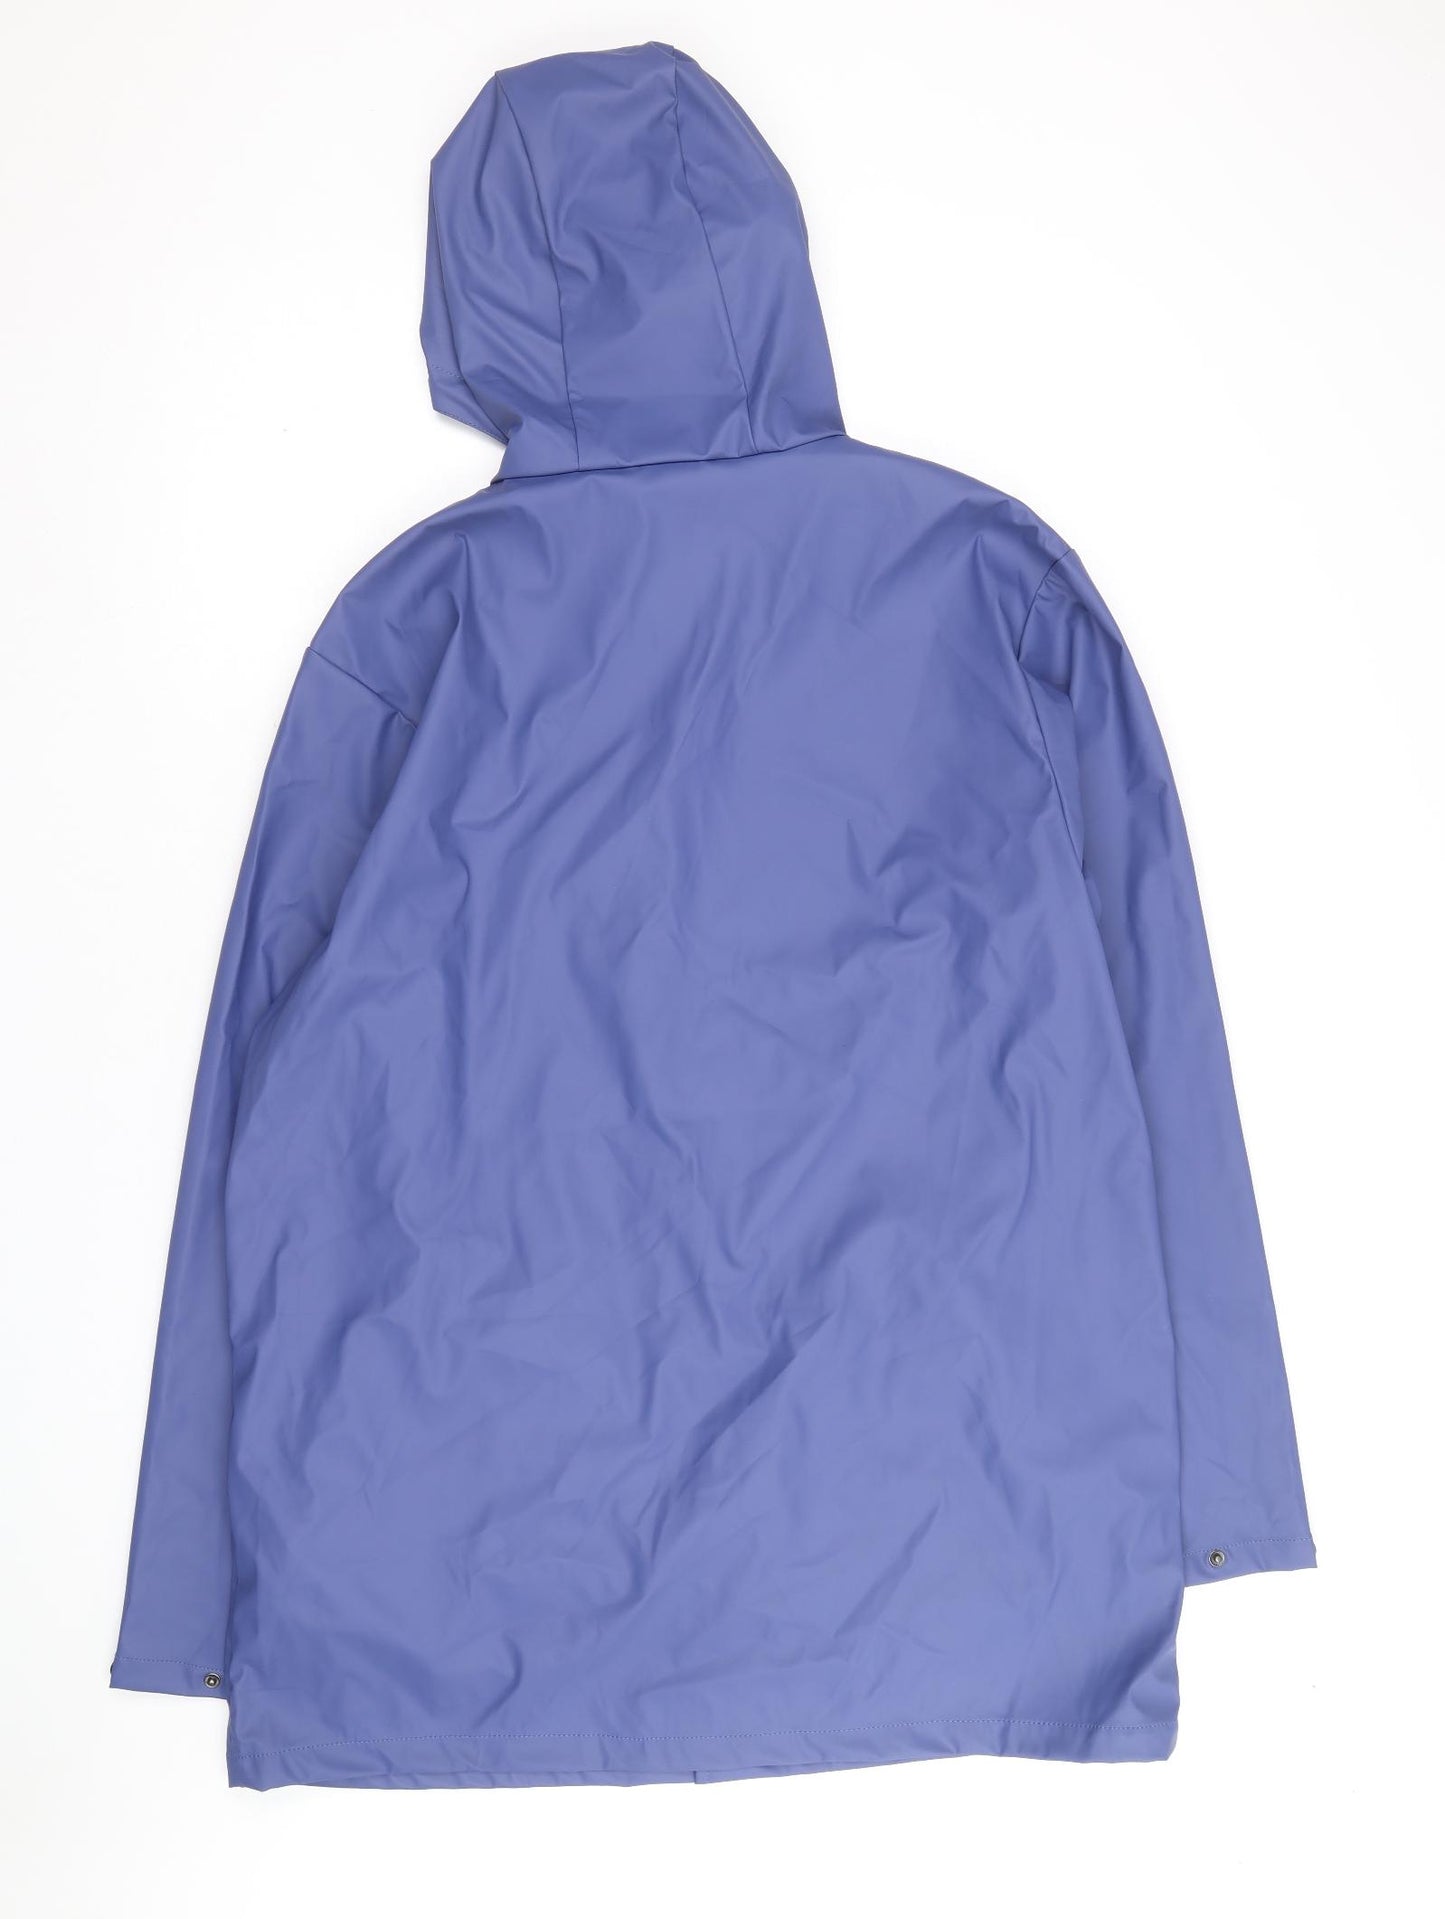 Highlander Mens Blue Rain Coat Coat Size XS Button